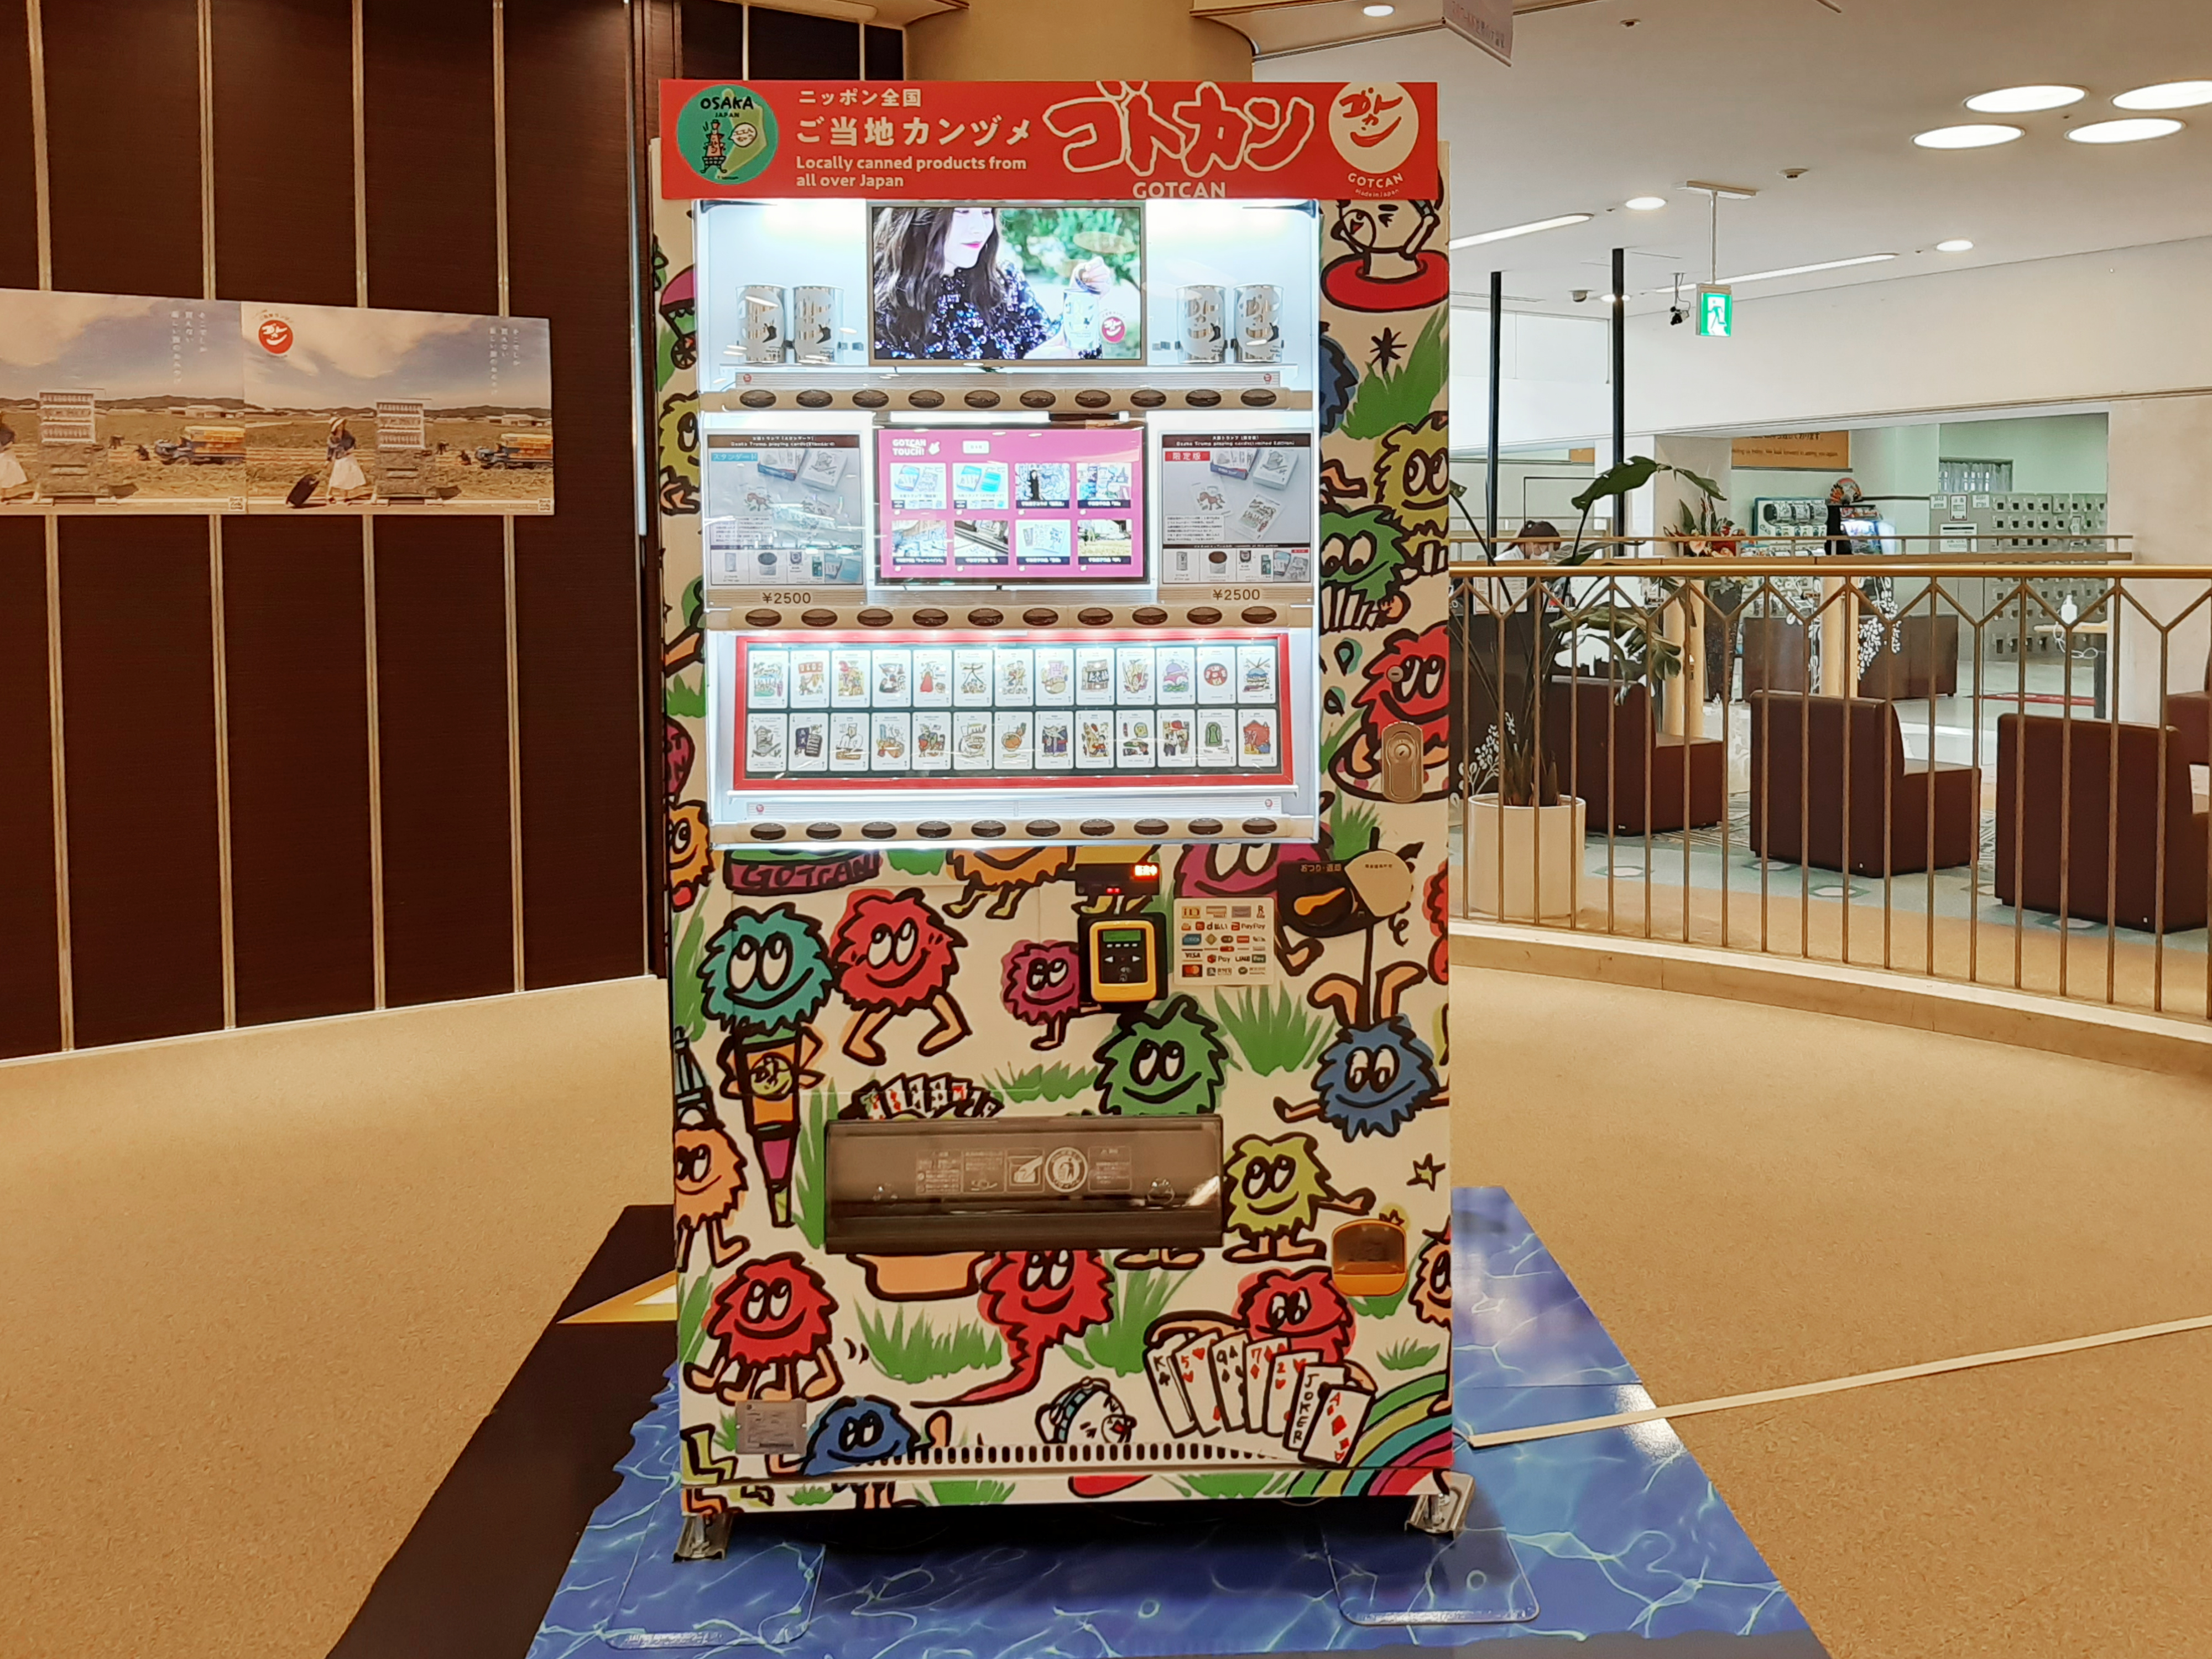 Introducing Osaka themed playing cards designed by Yasuko Sensyu, a popular, internationally-renowned illustrator from Osaka!